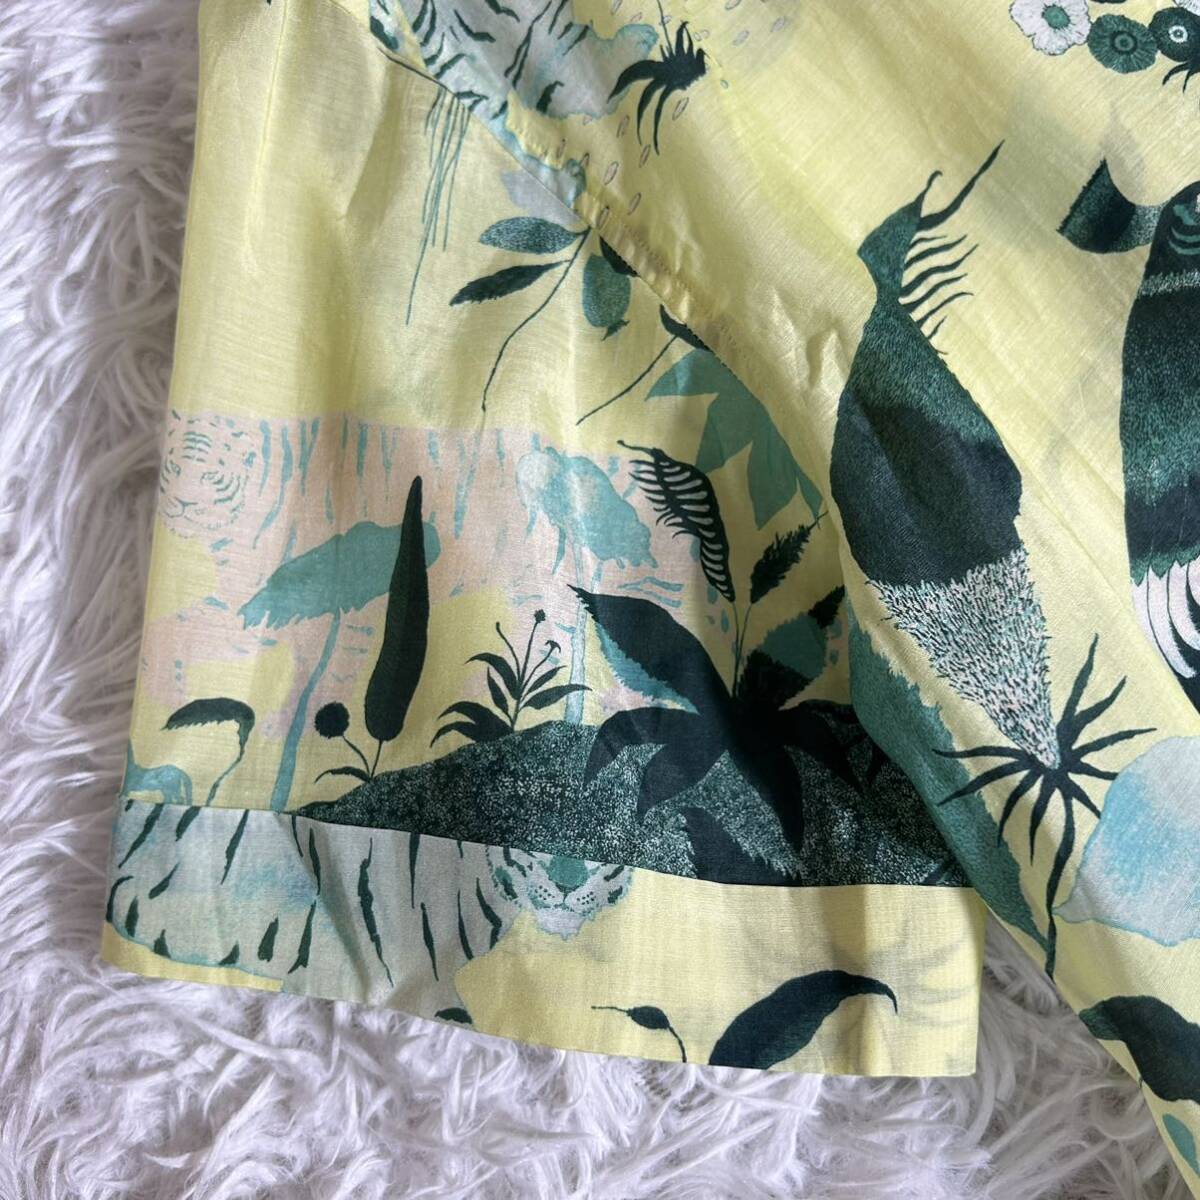  as good as new [ unused ]KEITA MARUYAMA Keita Maruyama short sleeves shirt open color total pattern animal pattern . pattern yellow 01 size cupra material 